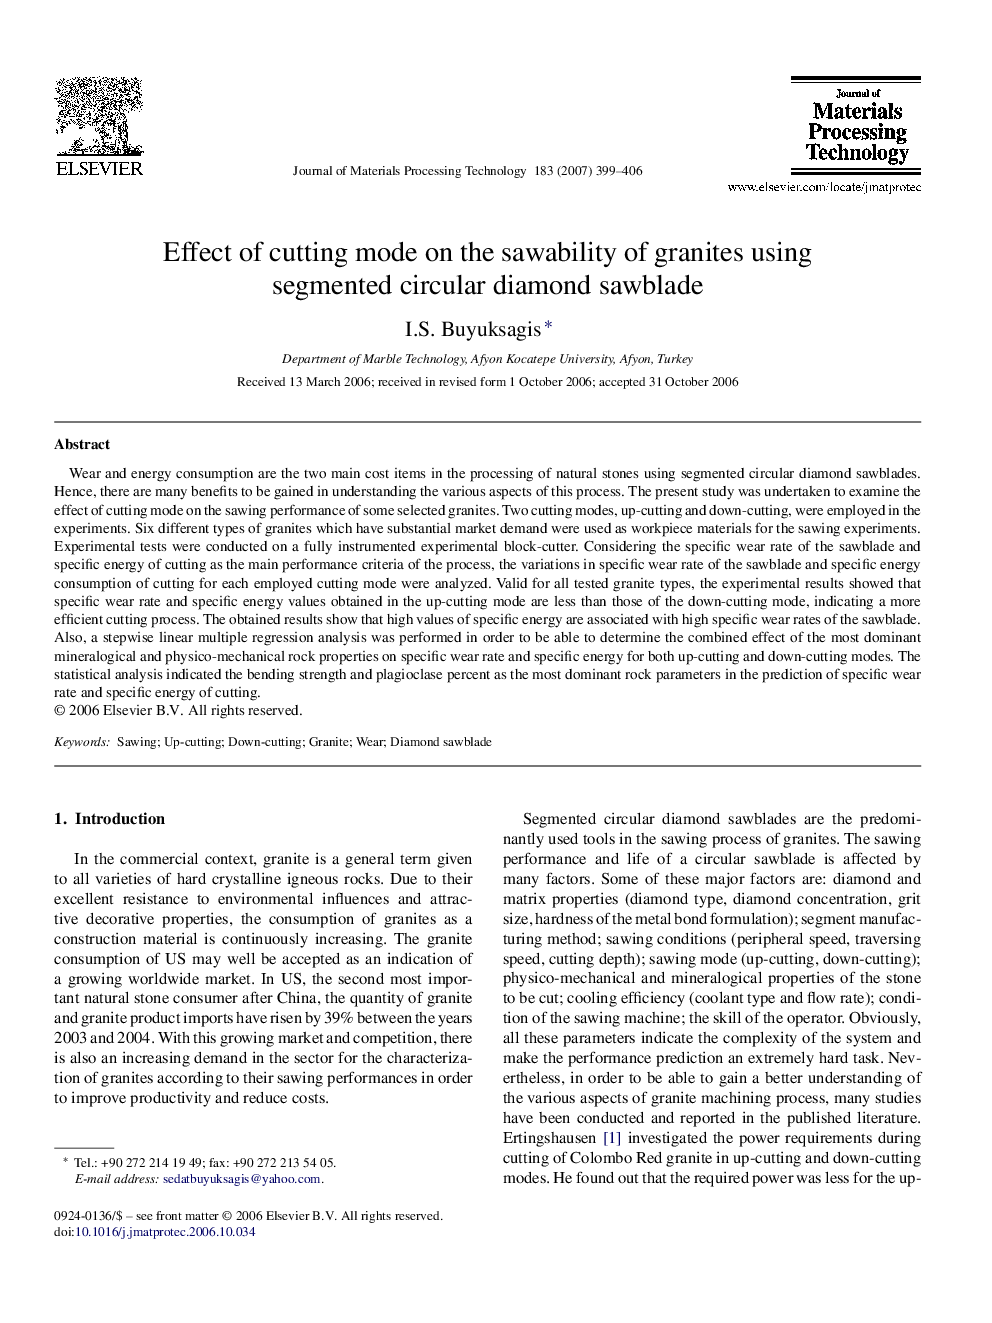 Effect of cutting mode on the sawability of granites using segmented circular diamond sawblade